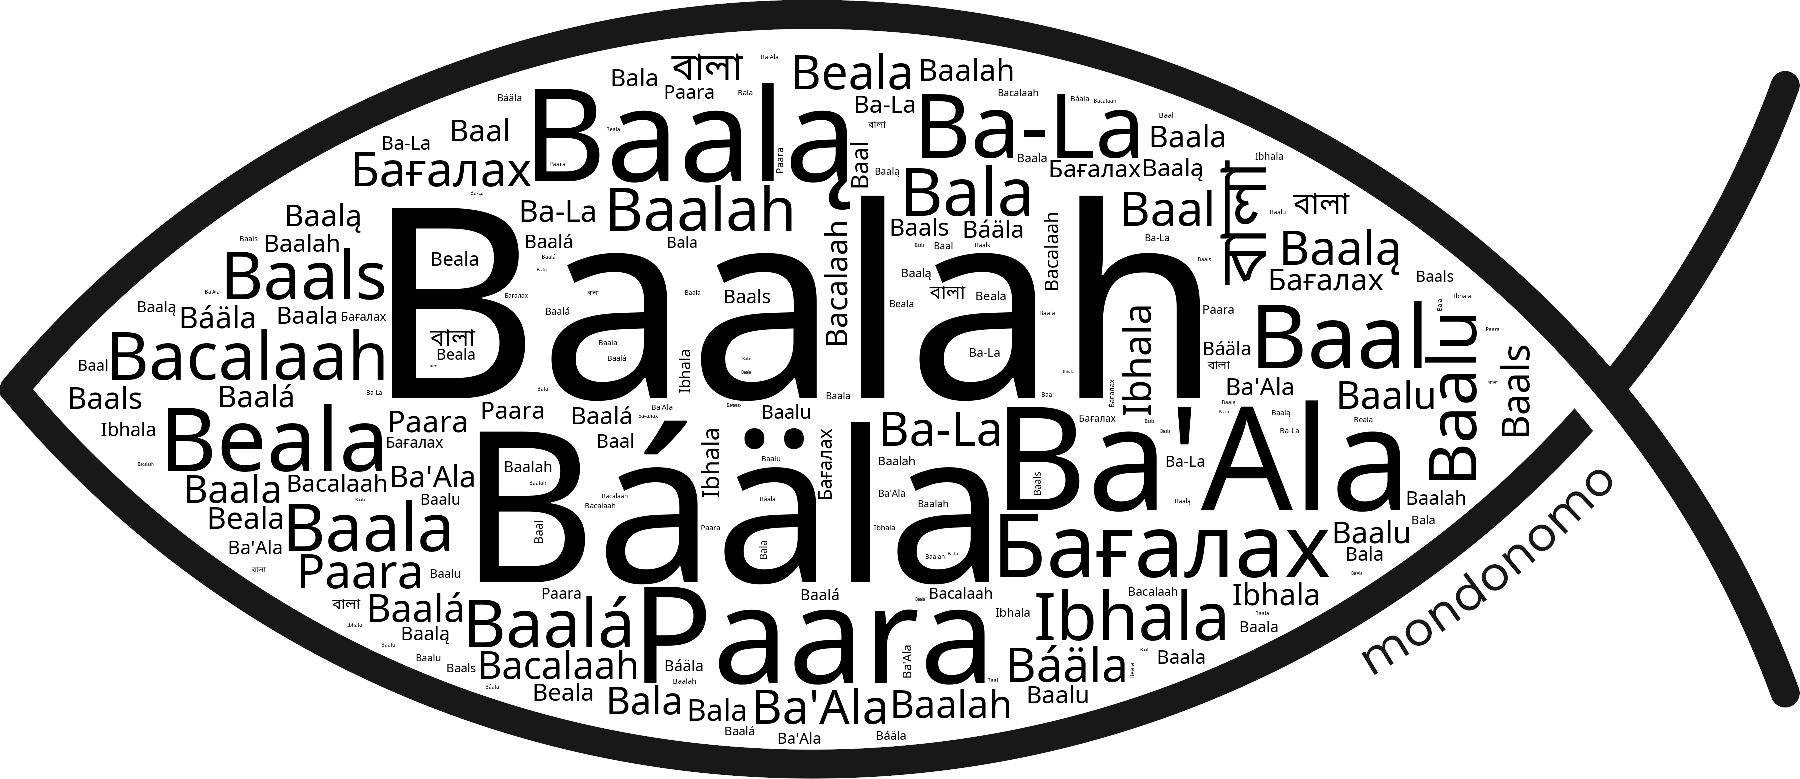 Name Baalah in the world's Bibles